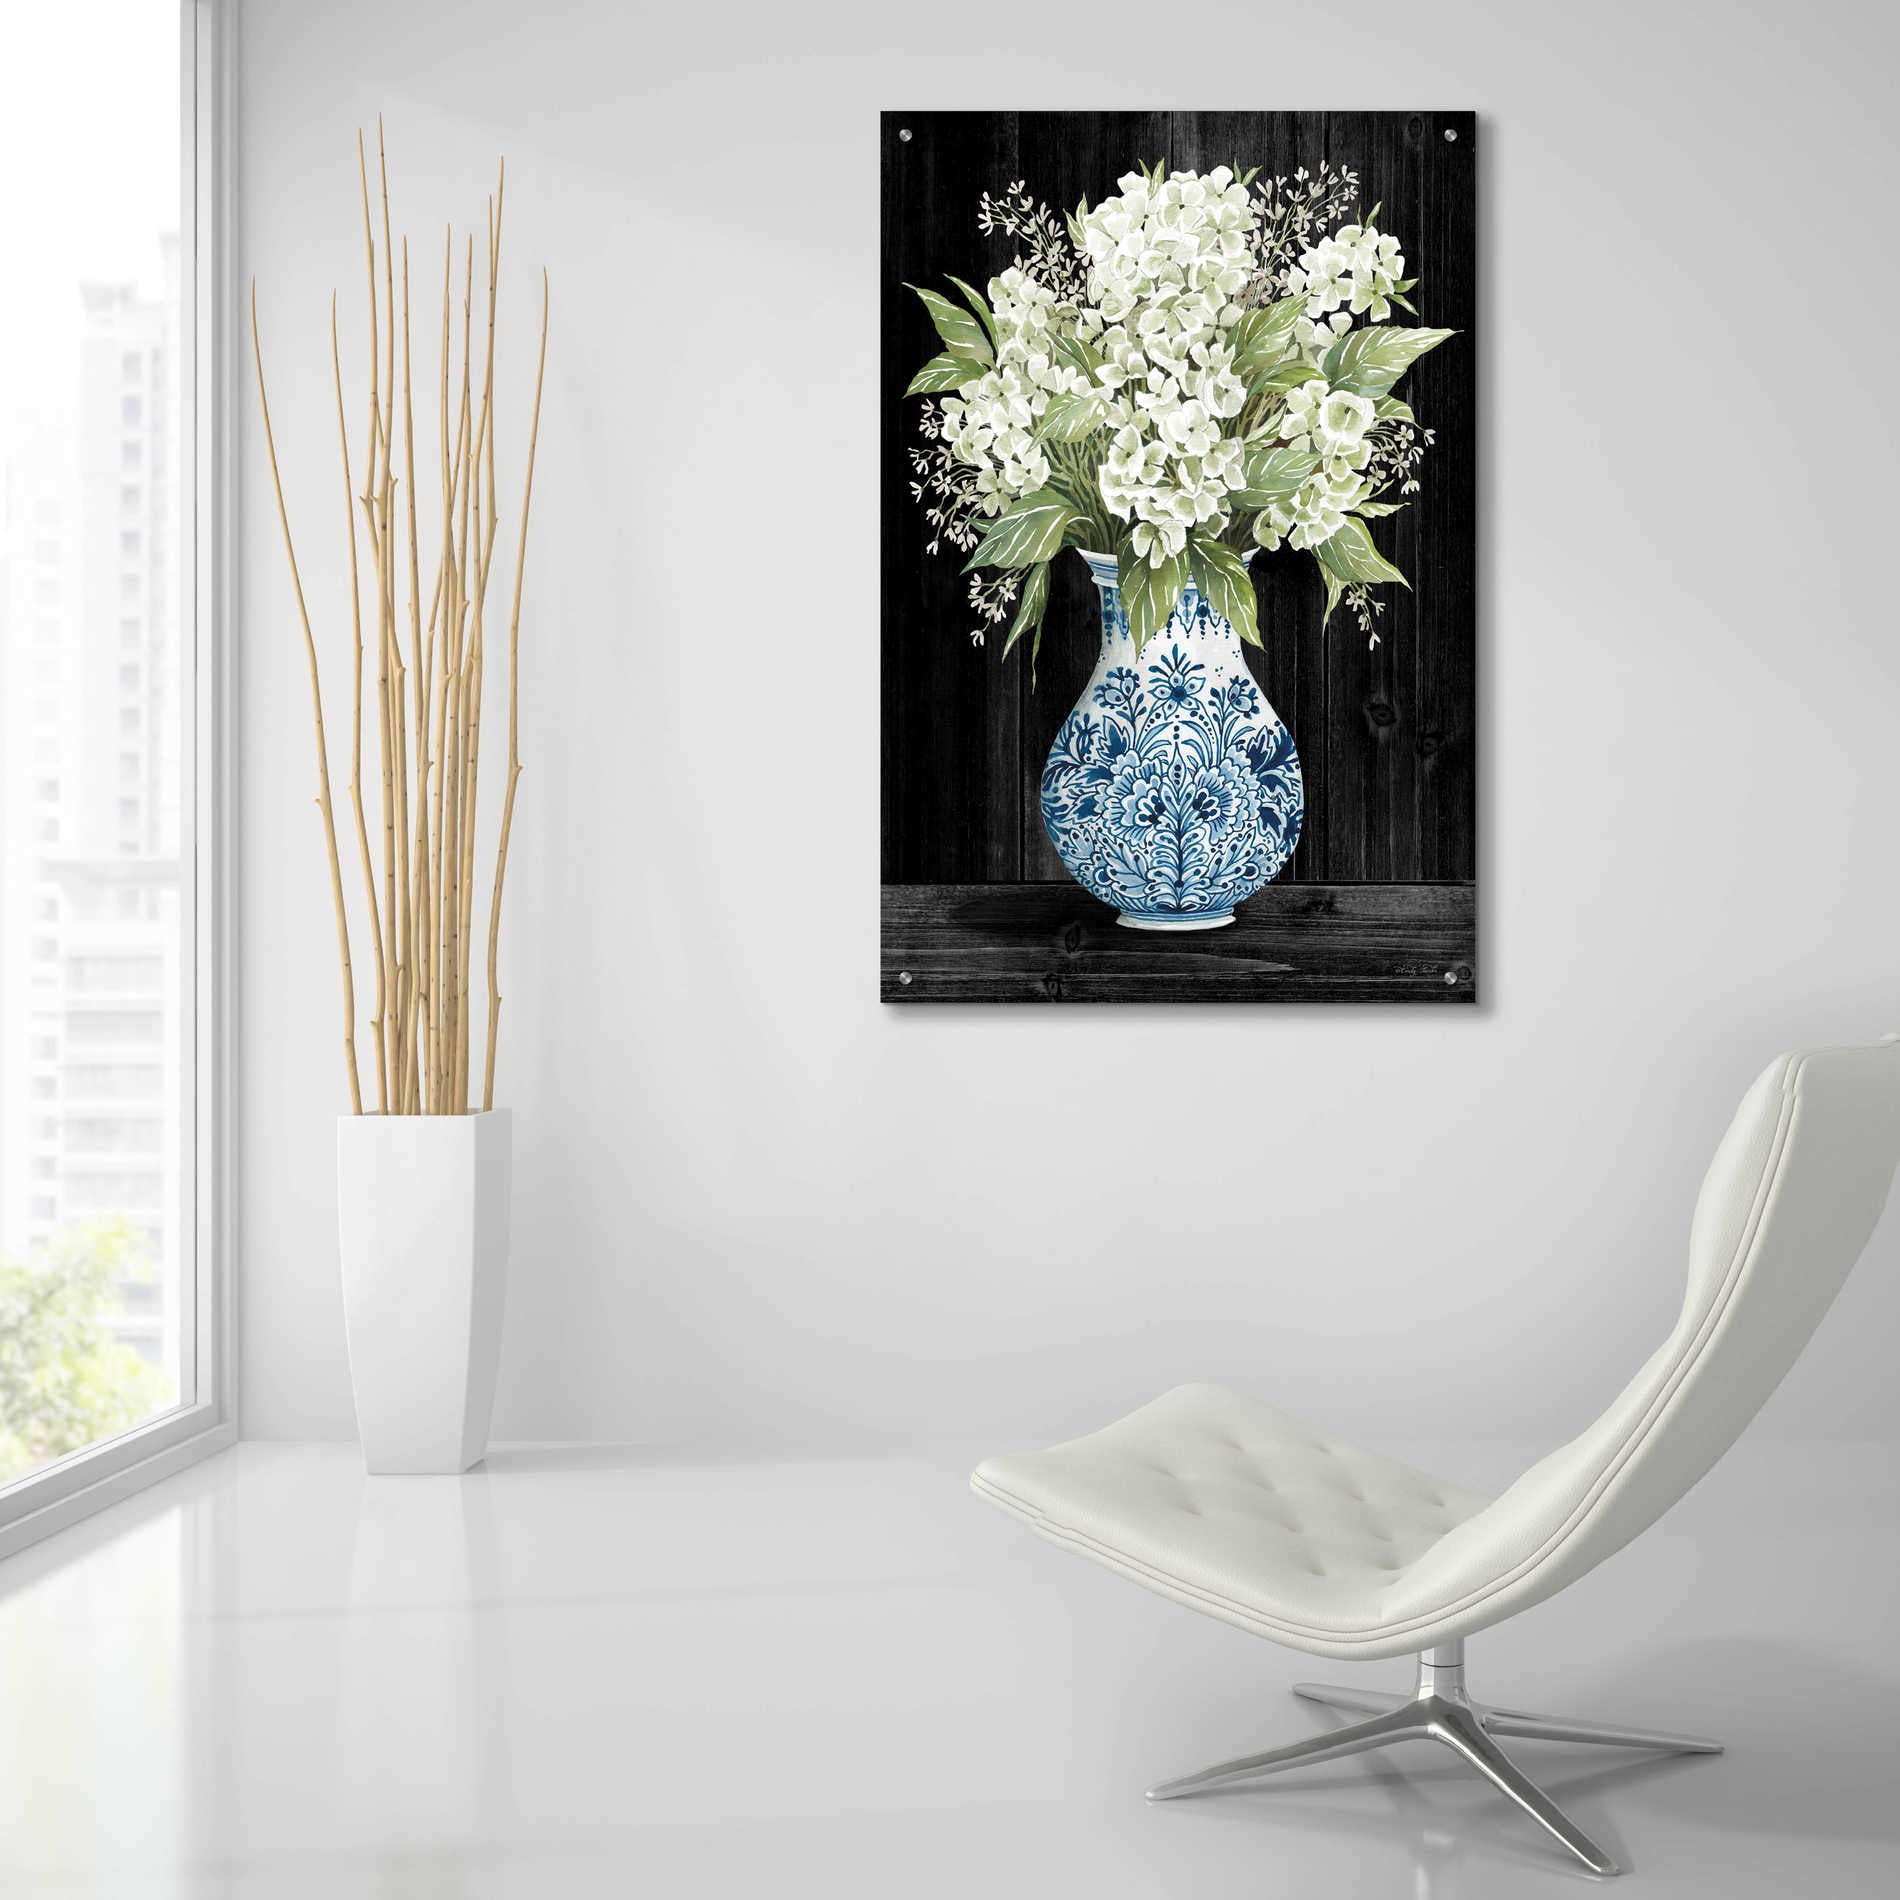 Epic Art 'Hydrangea Elegance' by Cindy Jacobs, Acrylic Glass Wall Art,24x36